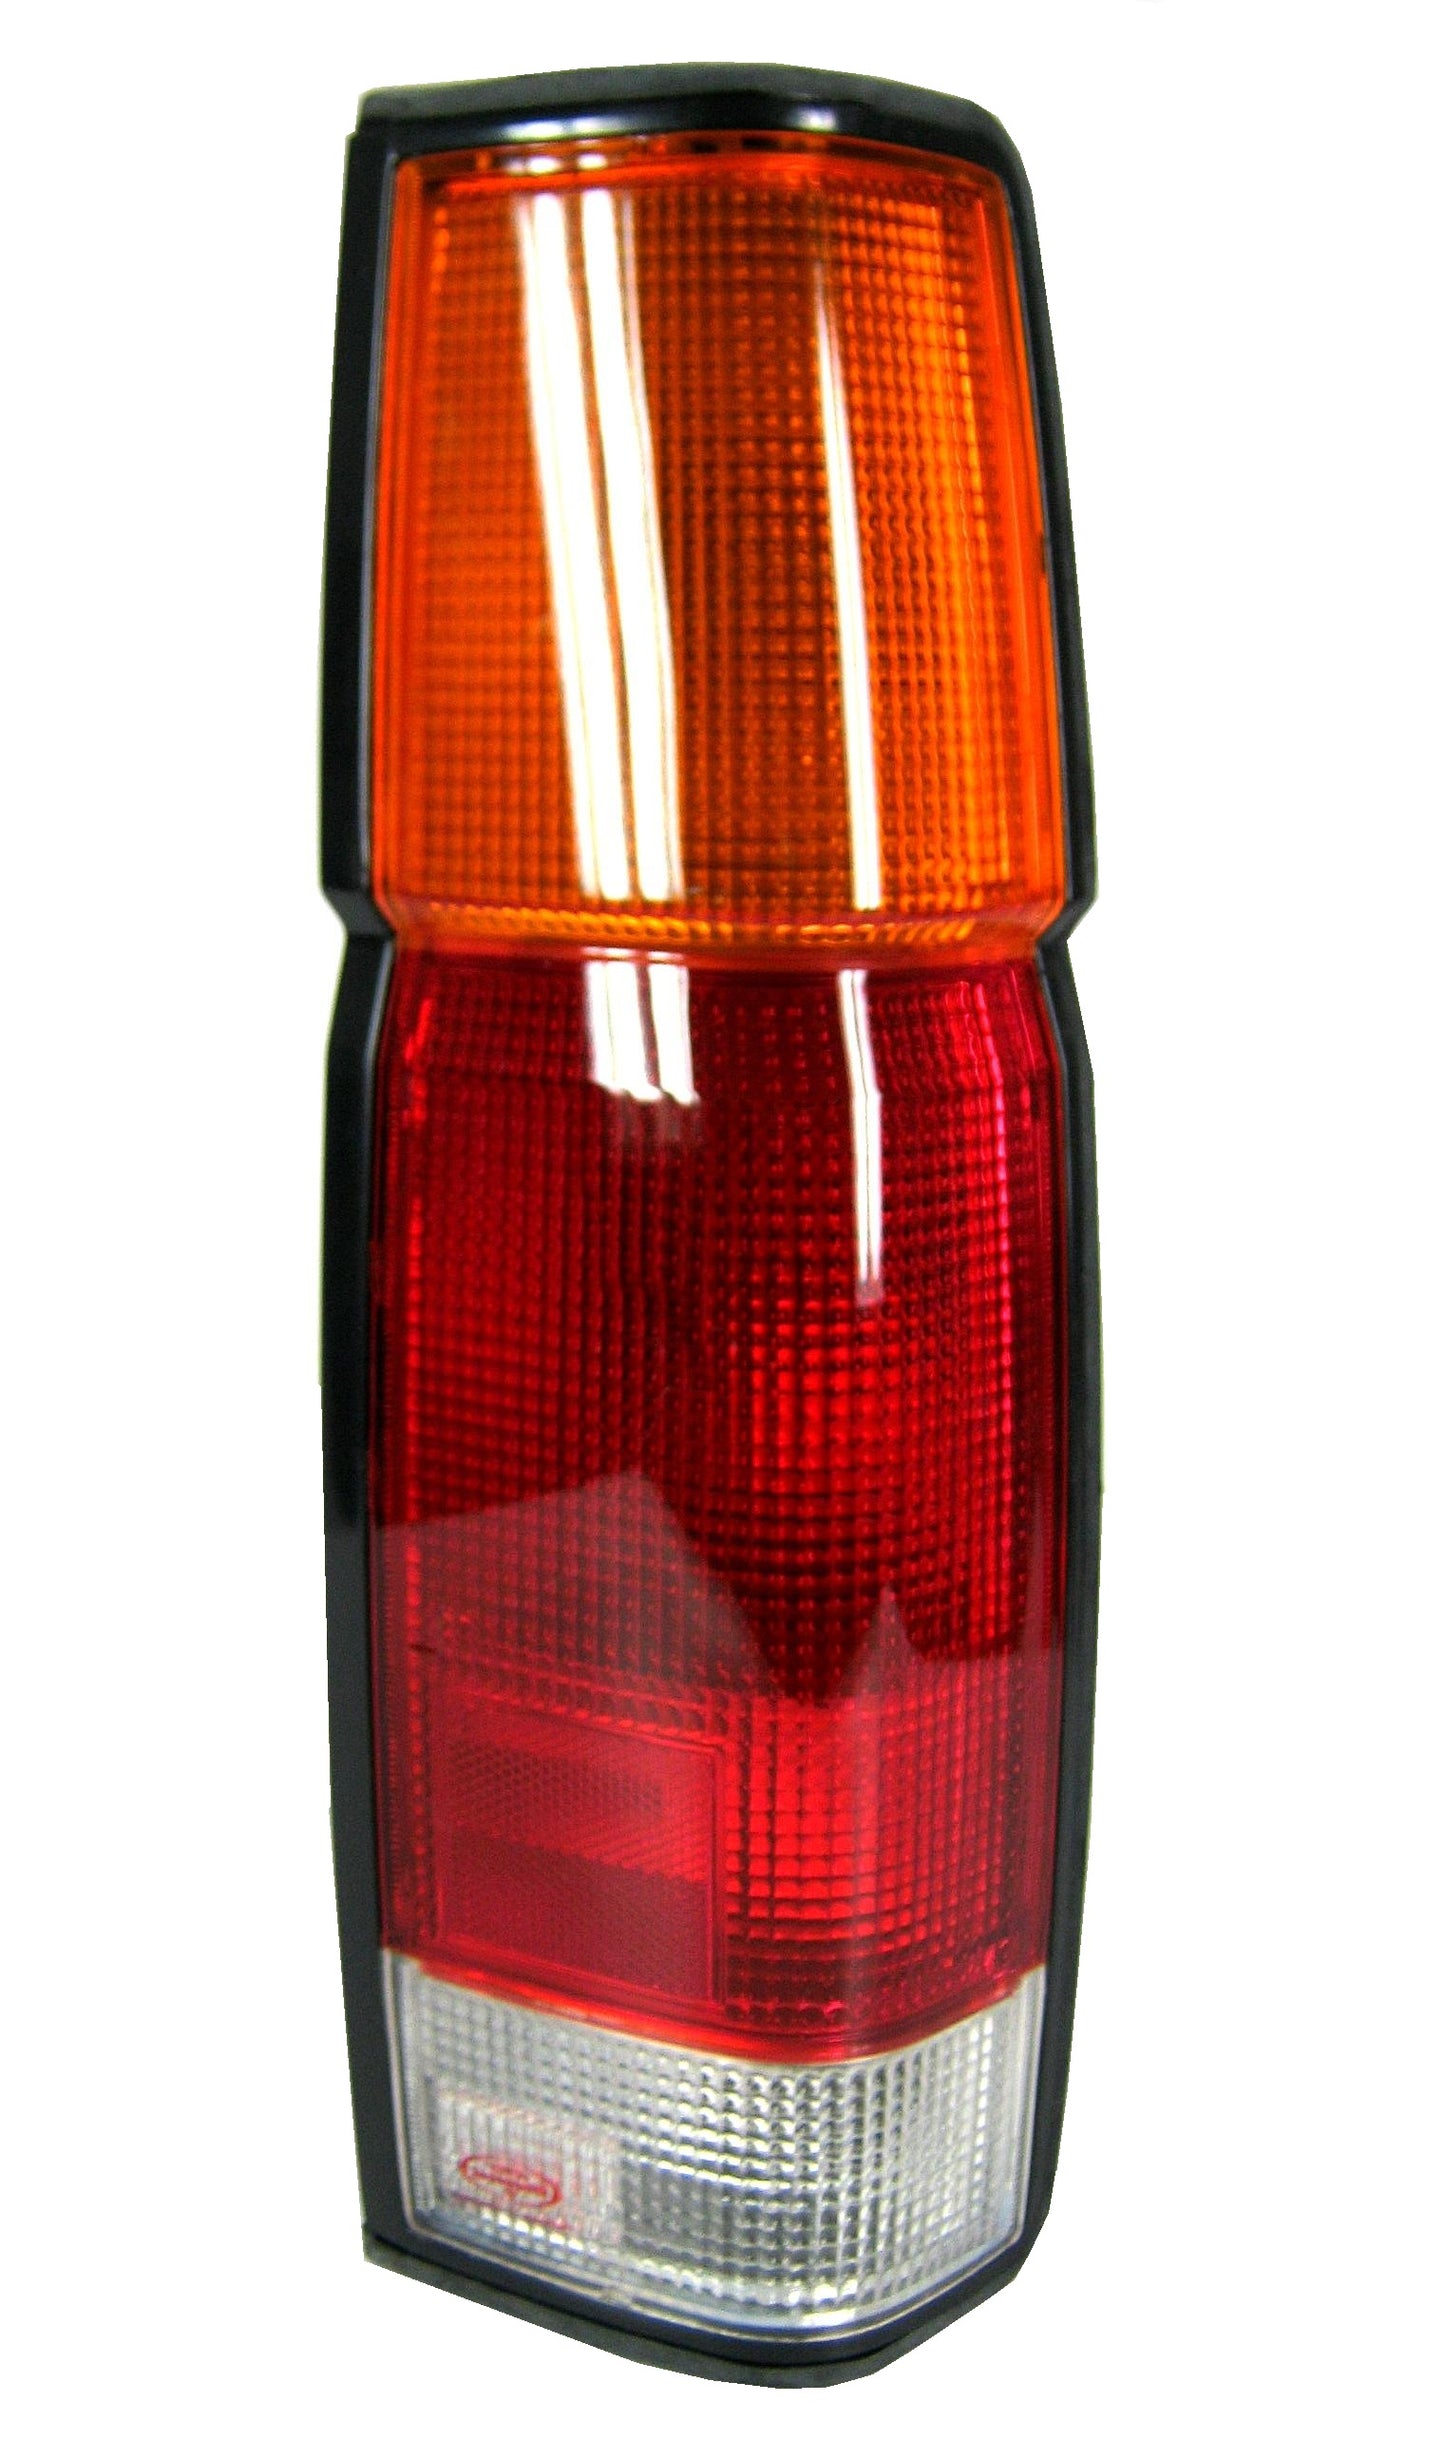 Rear Light - ORANGE/RED/CLEAR (40cm tall) - RH - for Nissan Navara D21